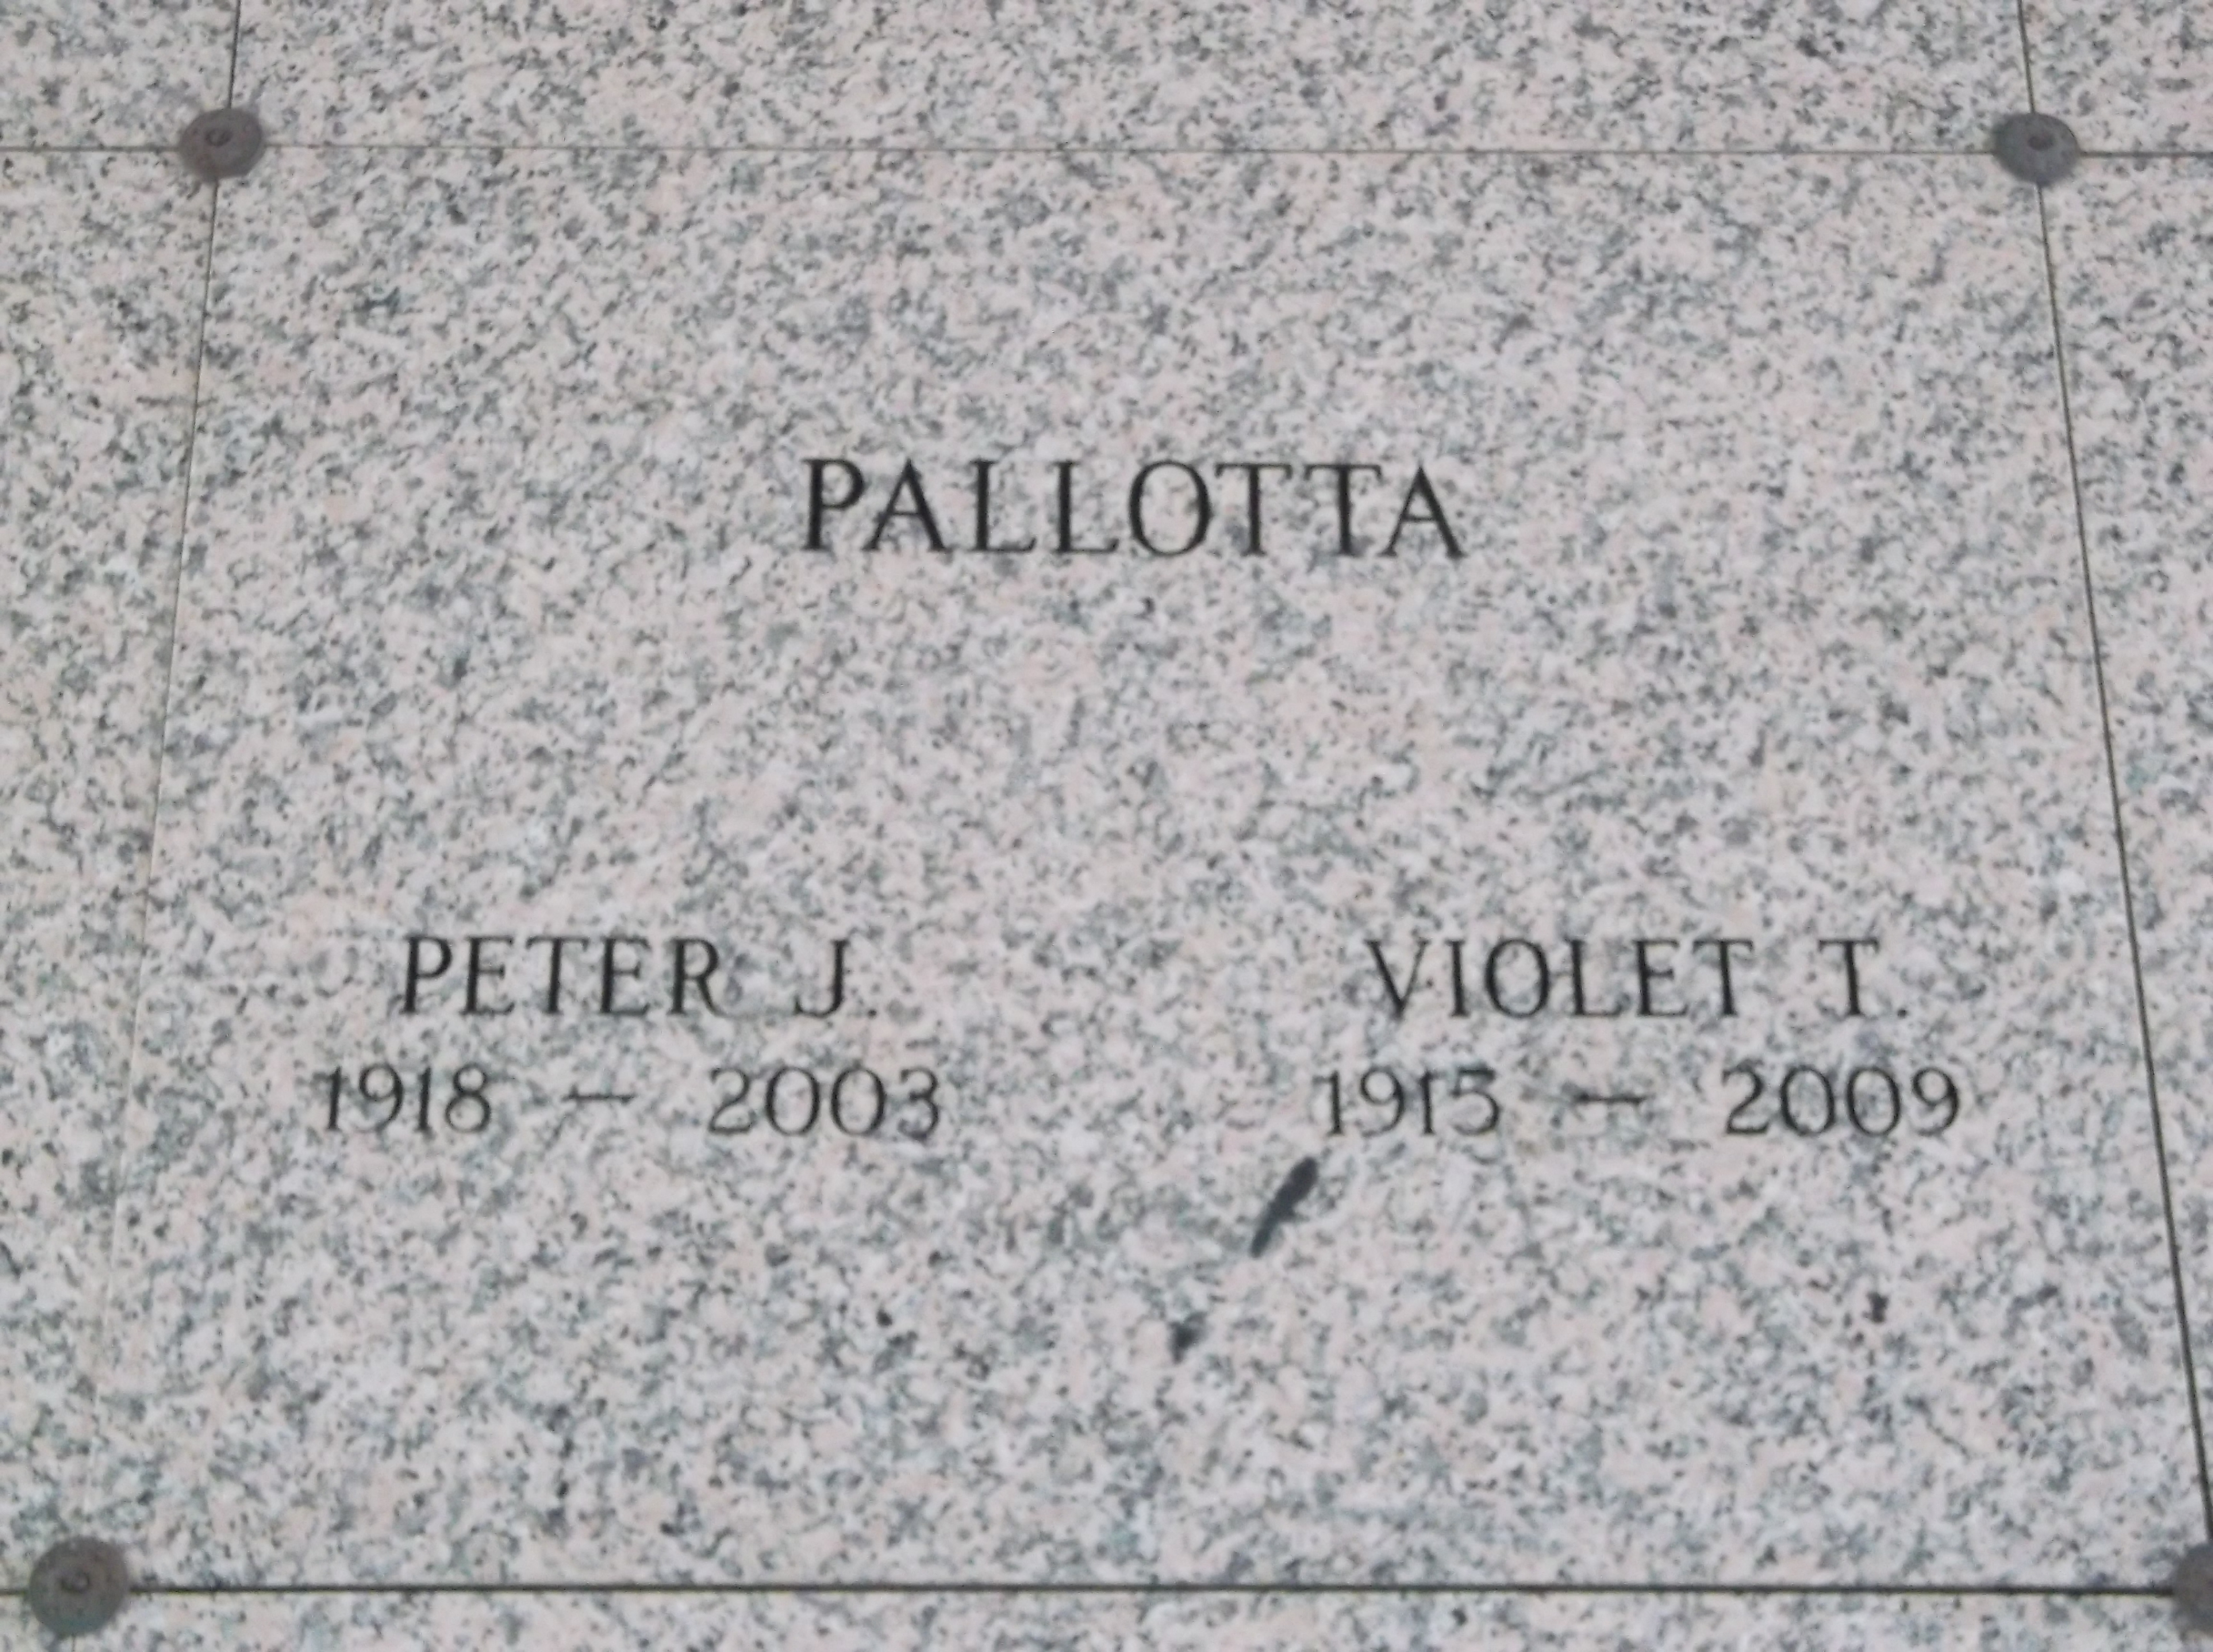 Peter J Pallotta